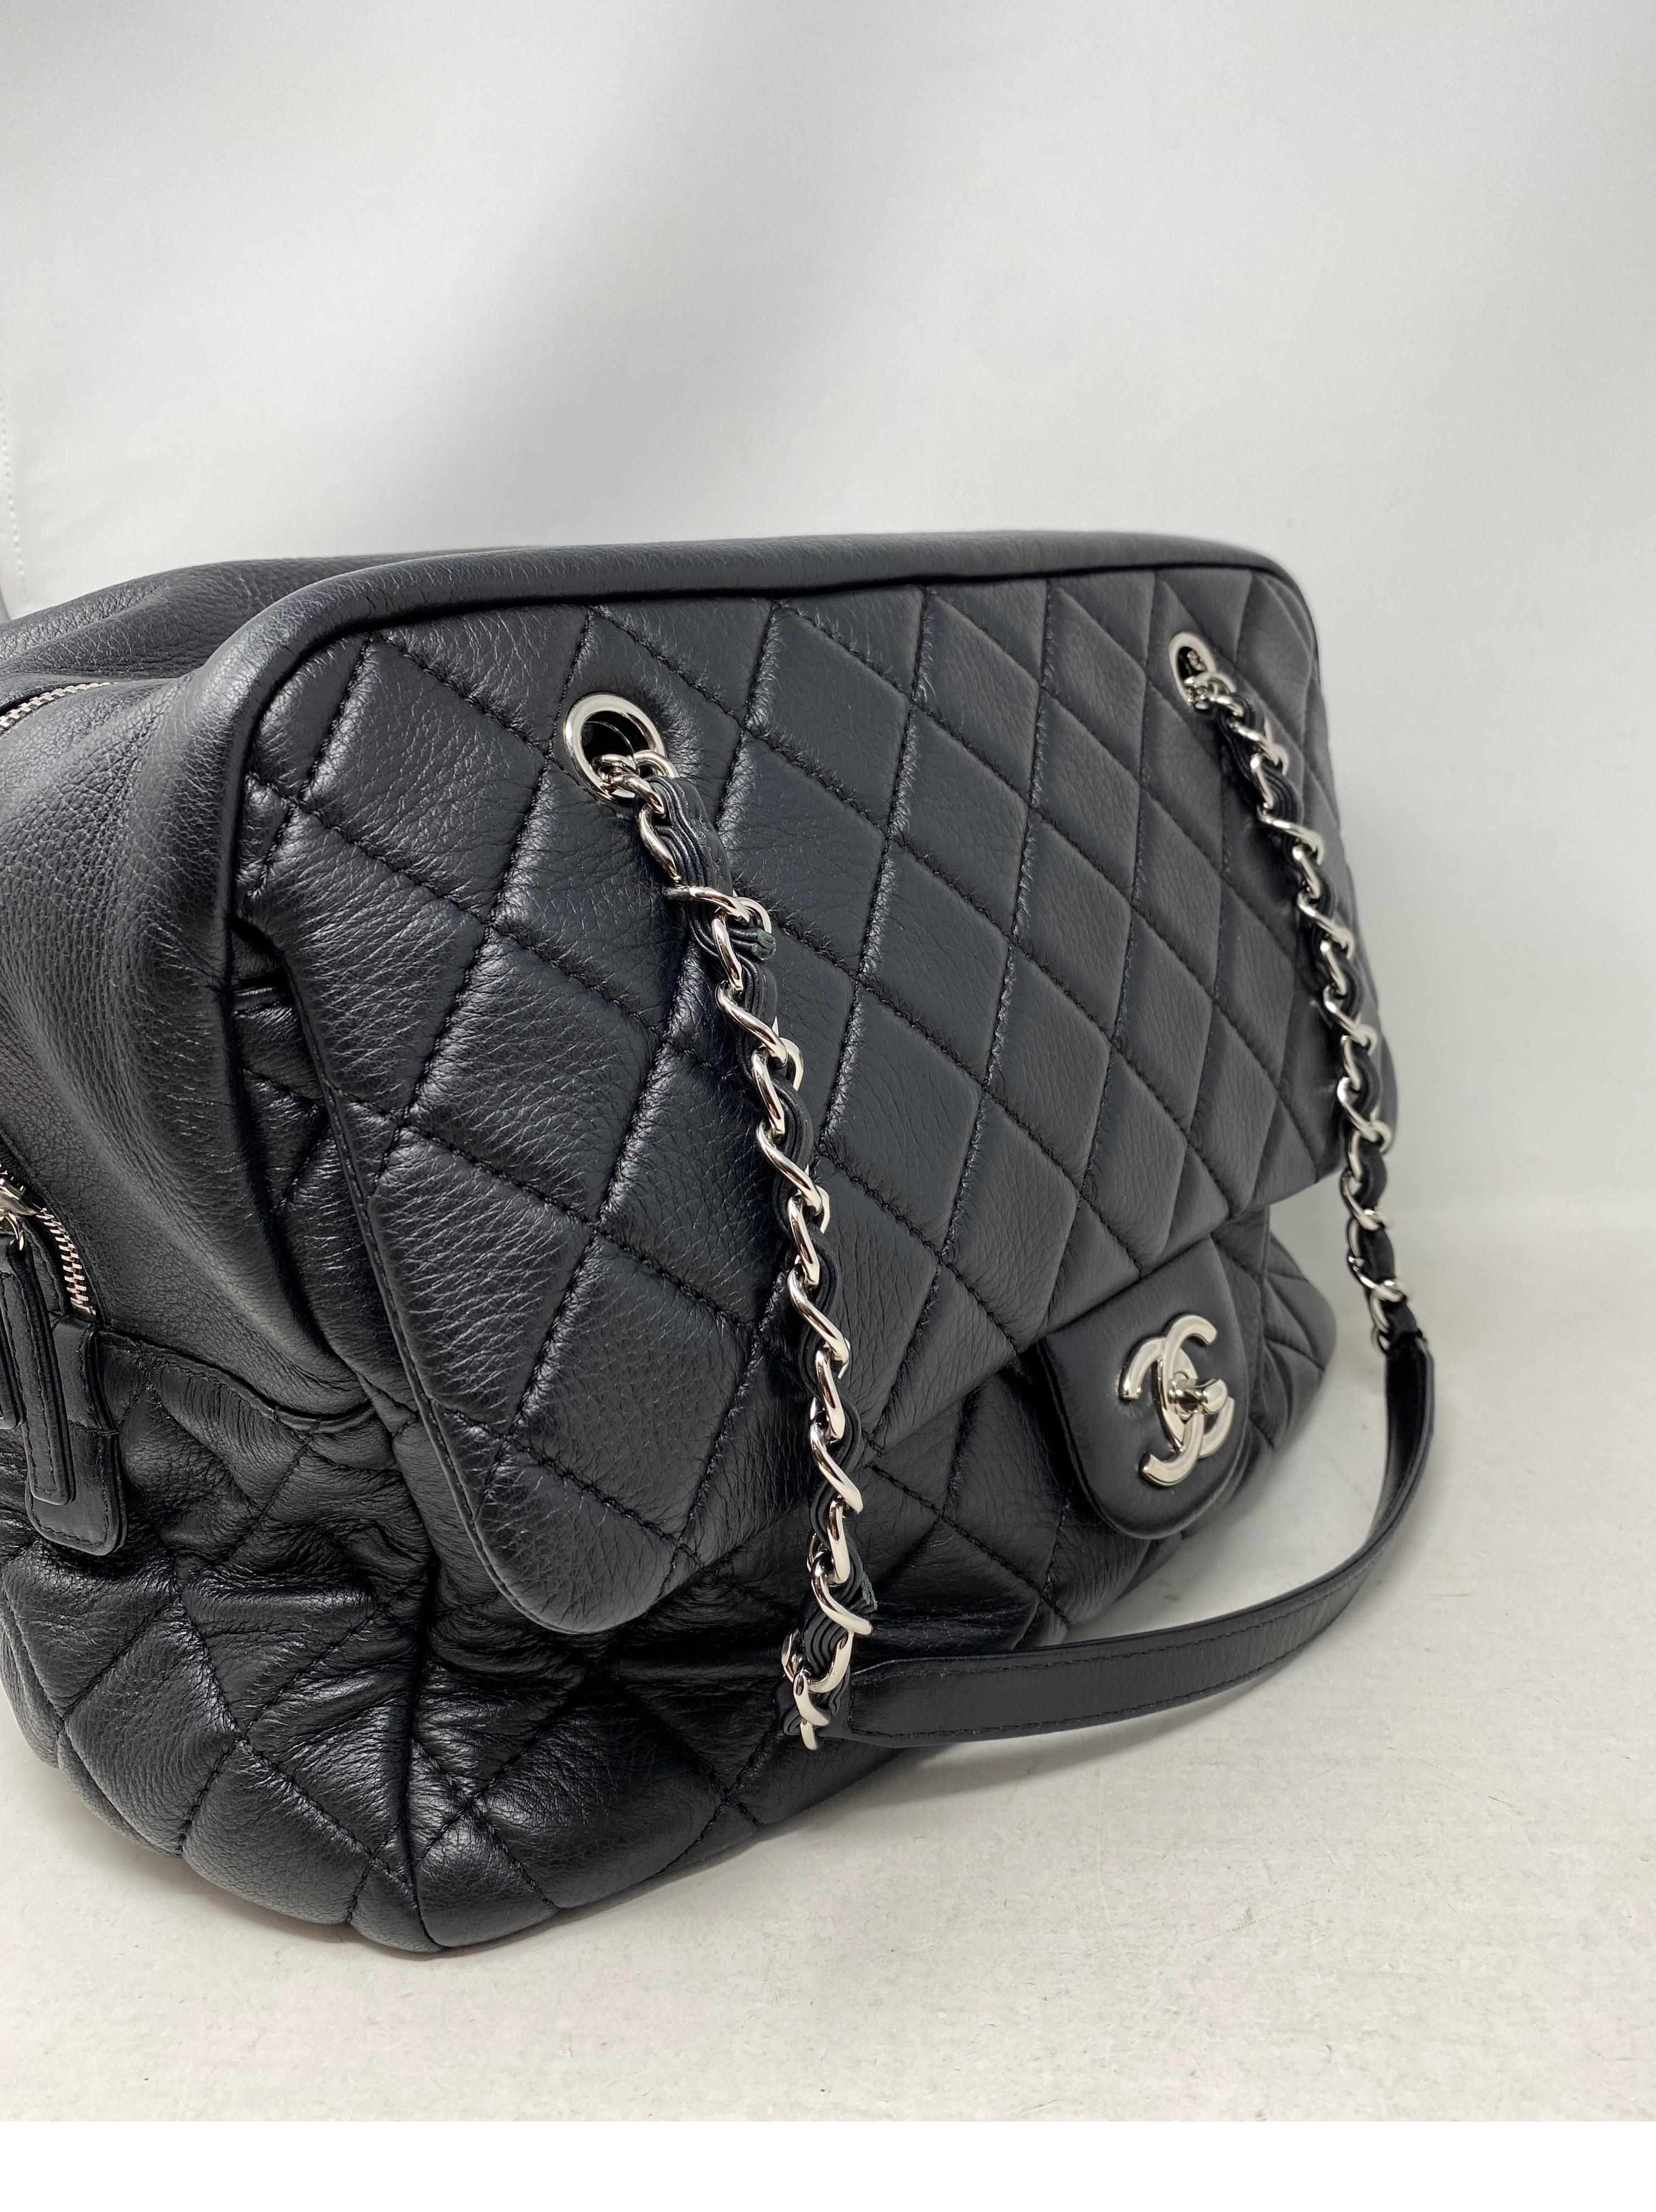 Chanel Black Bowler Tote Bag 1